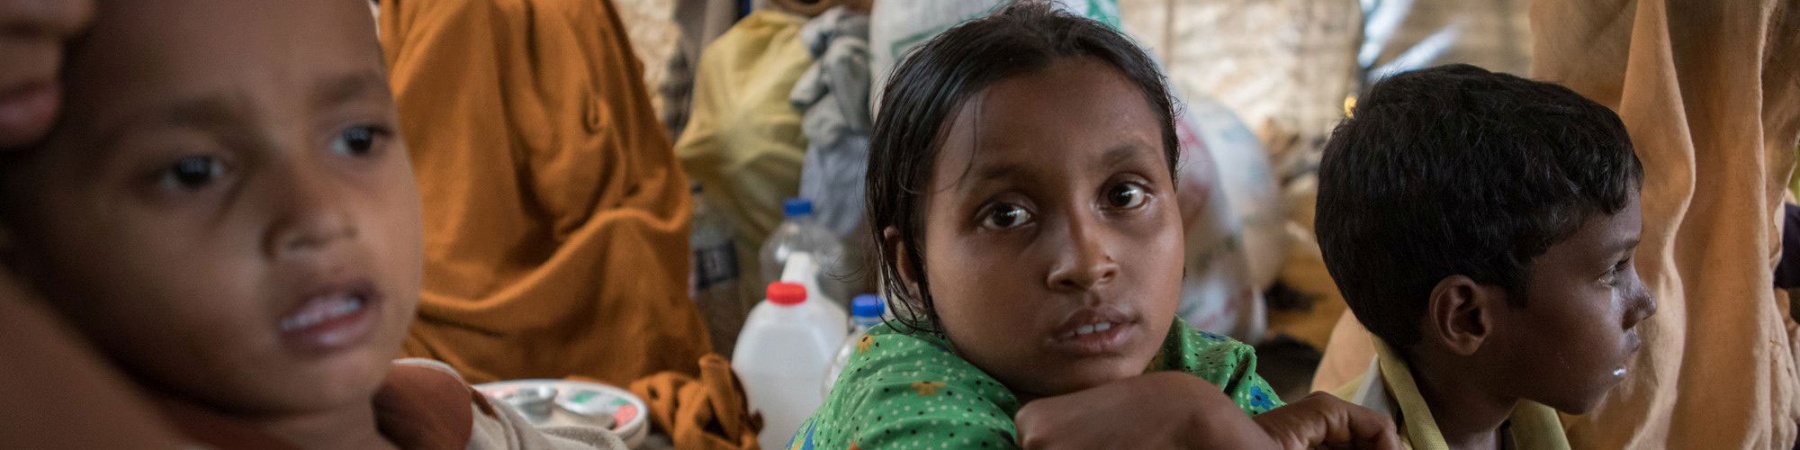 Una bambina e due bambini rohingya seduti vicini